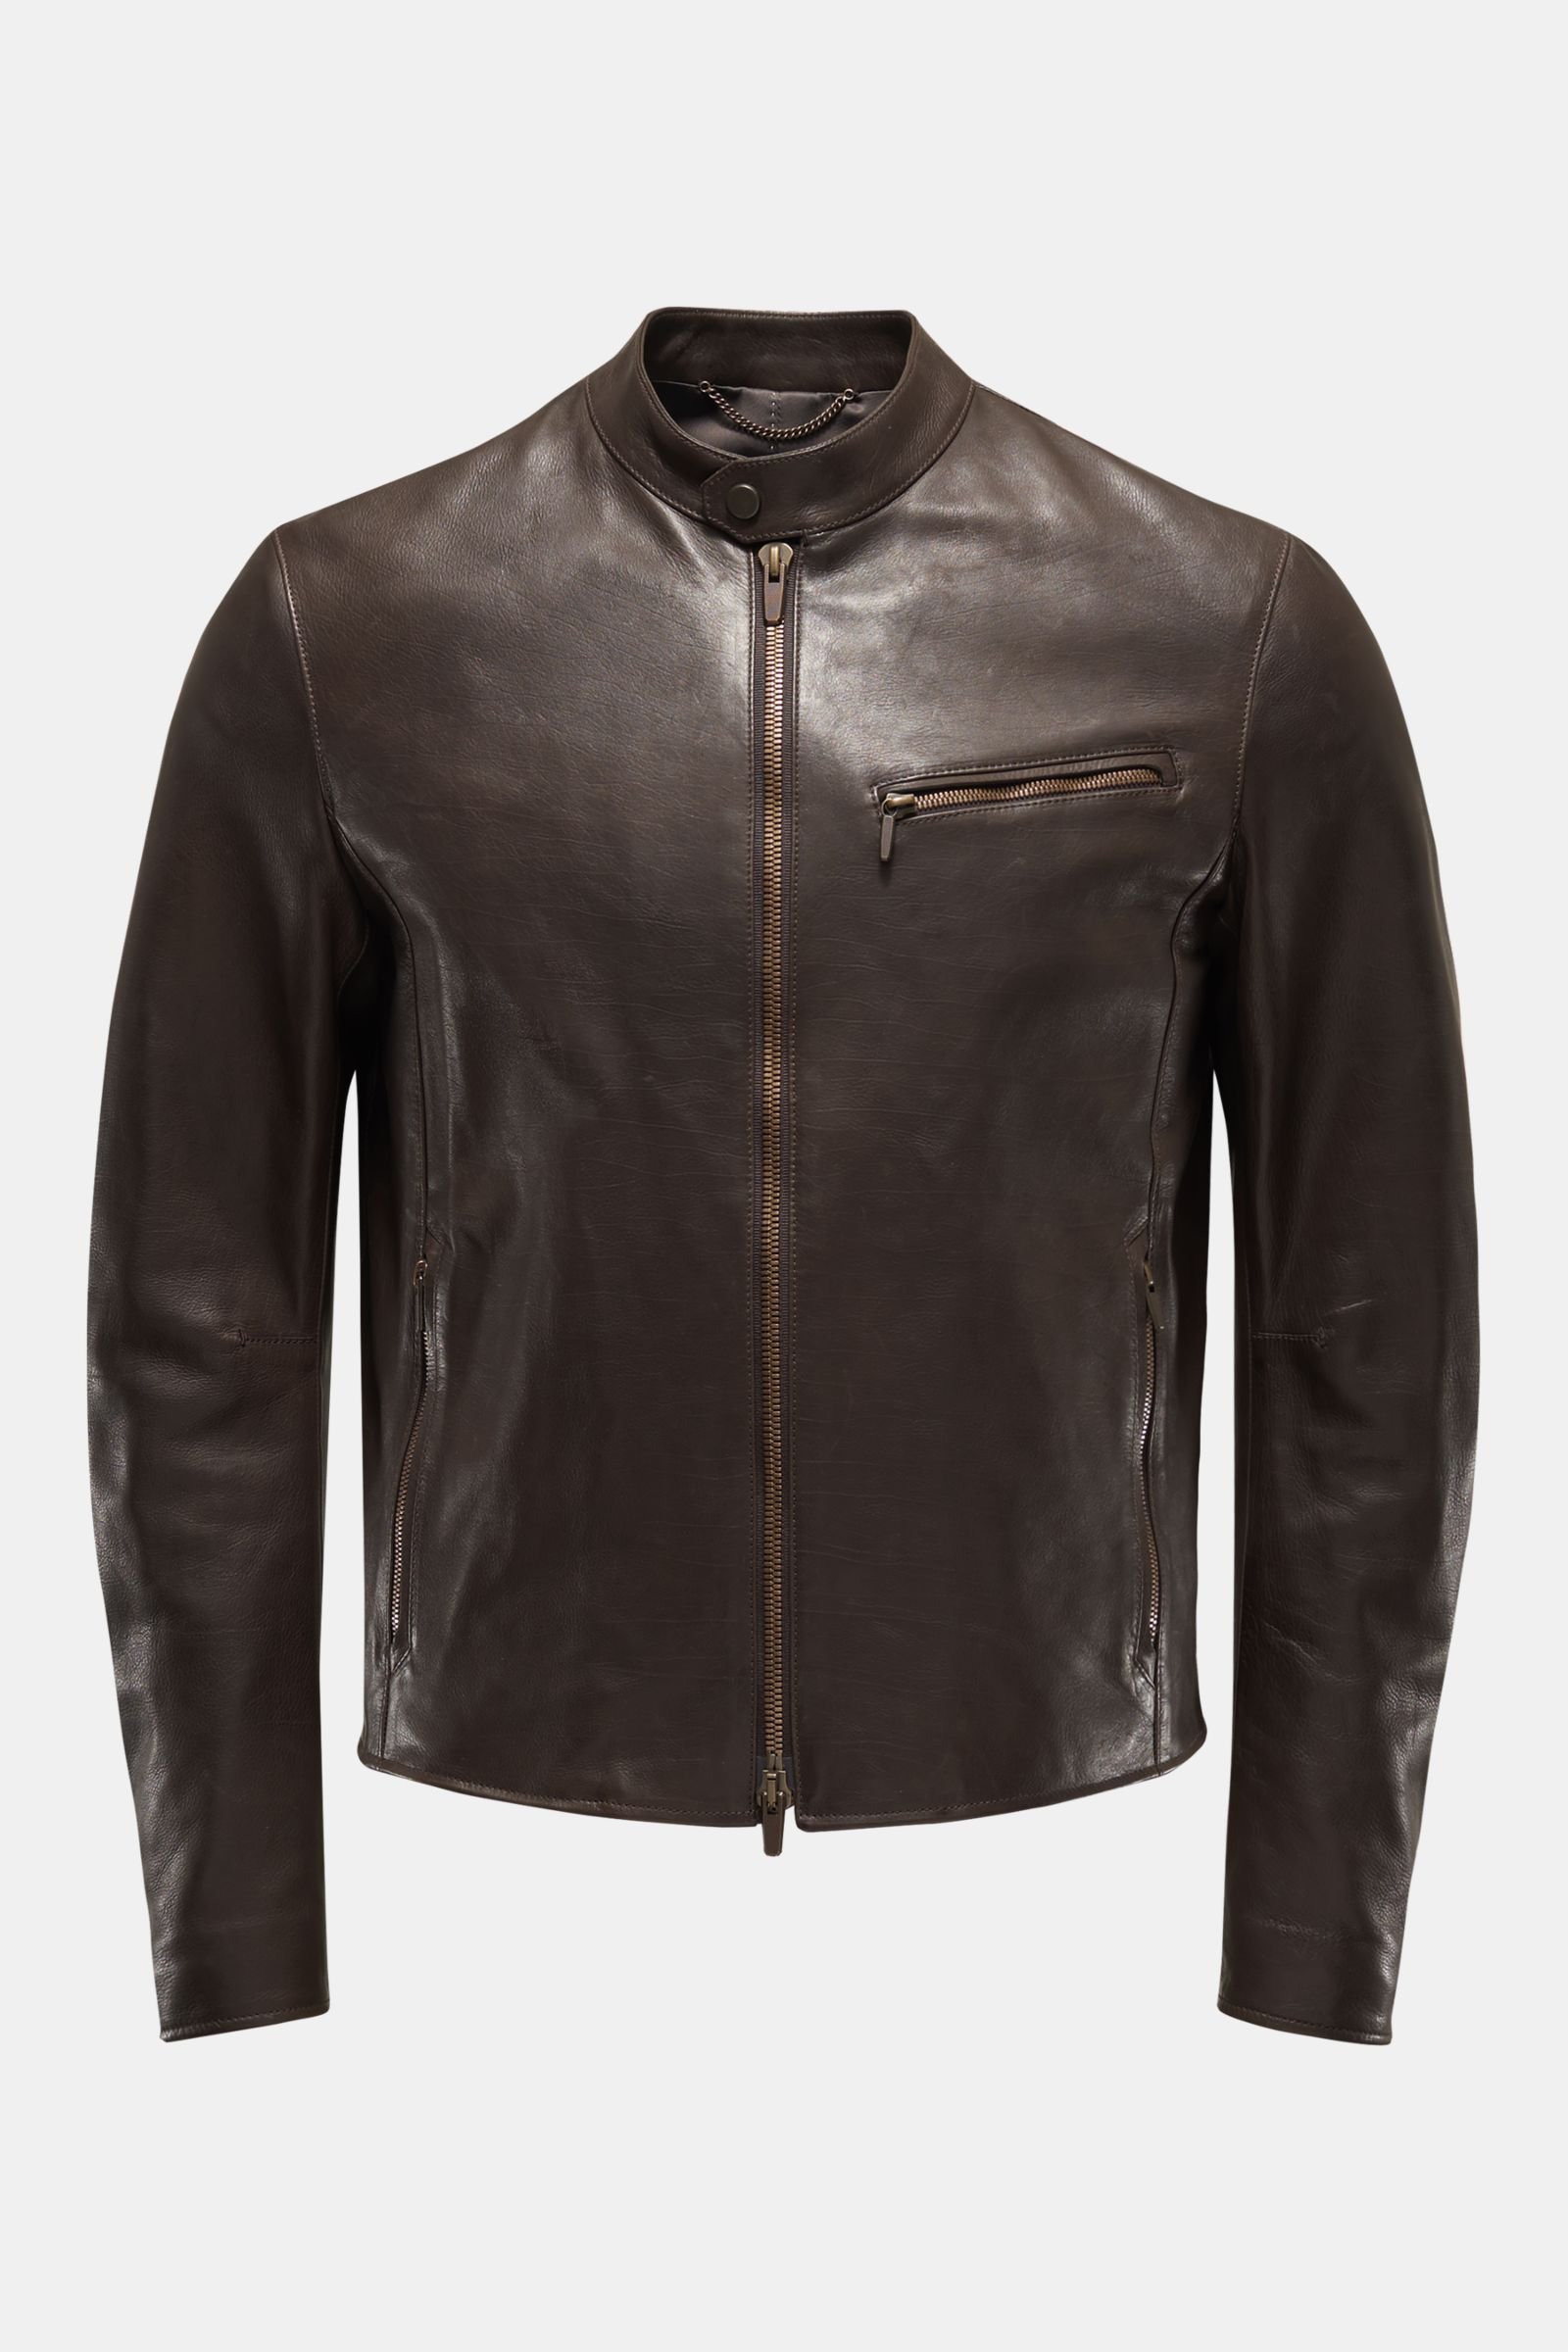 Leather jacket dark brown